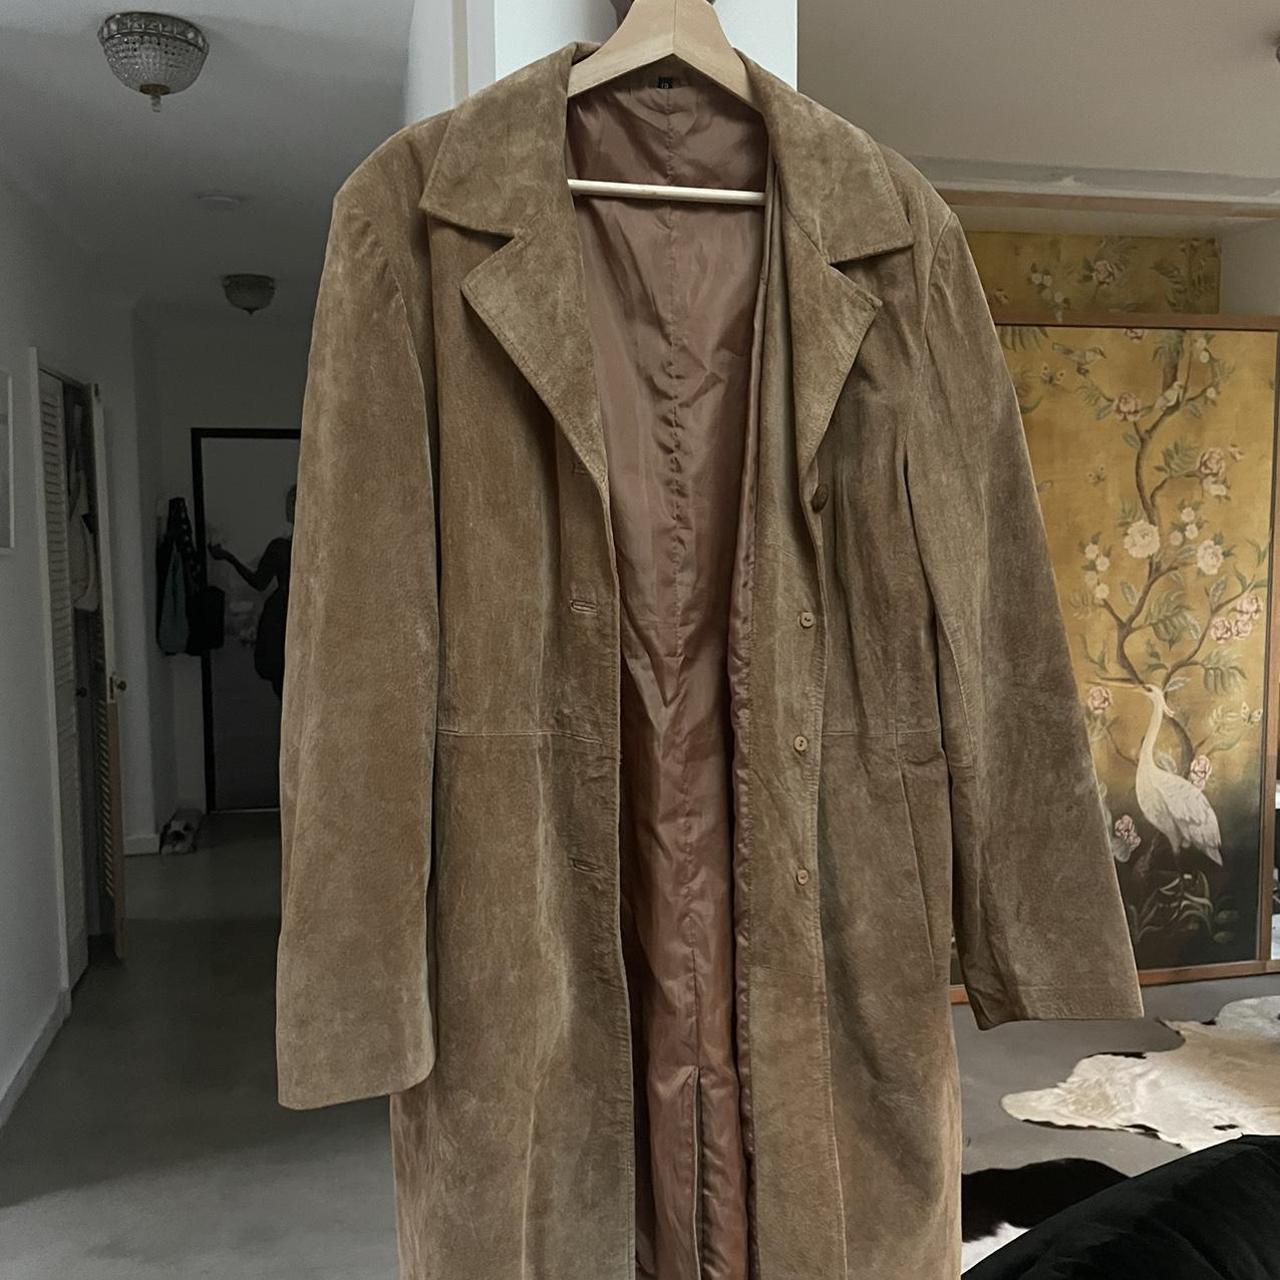 Camel suede vintage trench coat. Gorgeous on!! Just - Depop